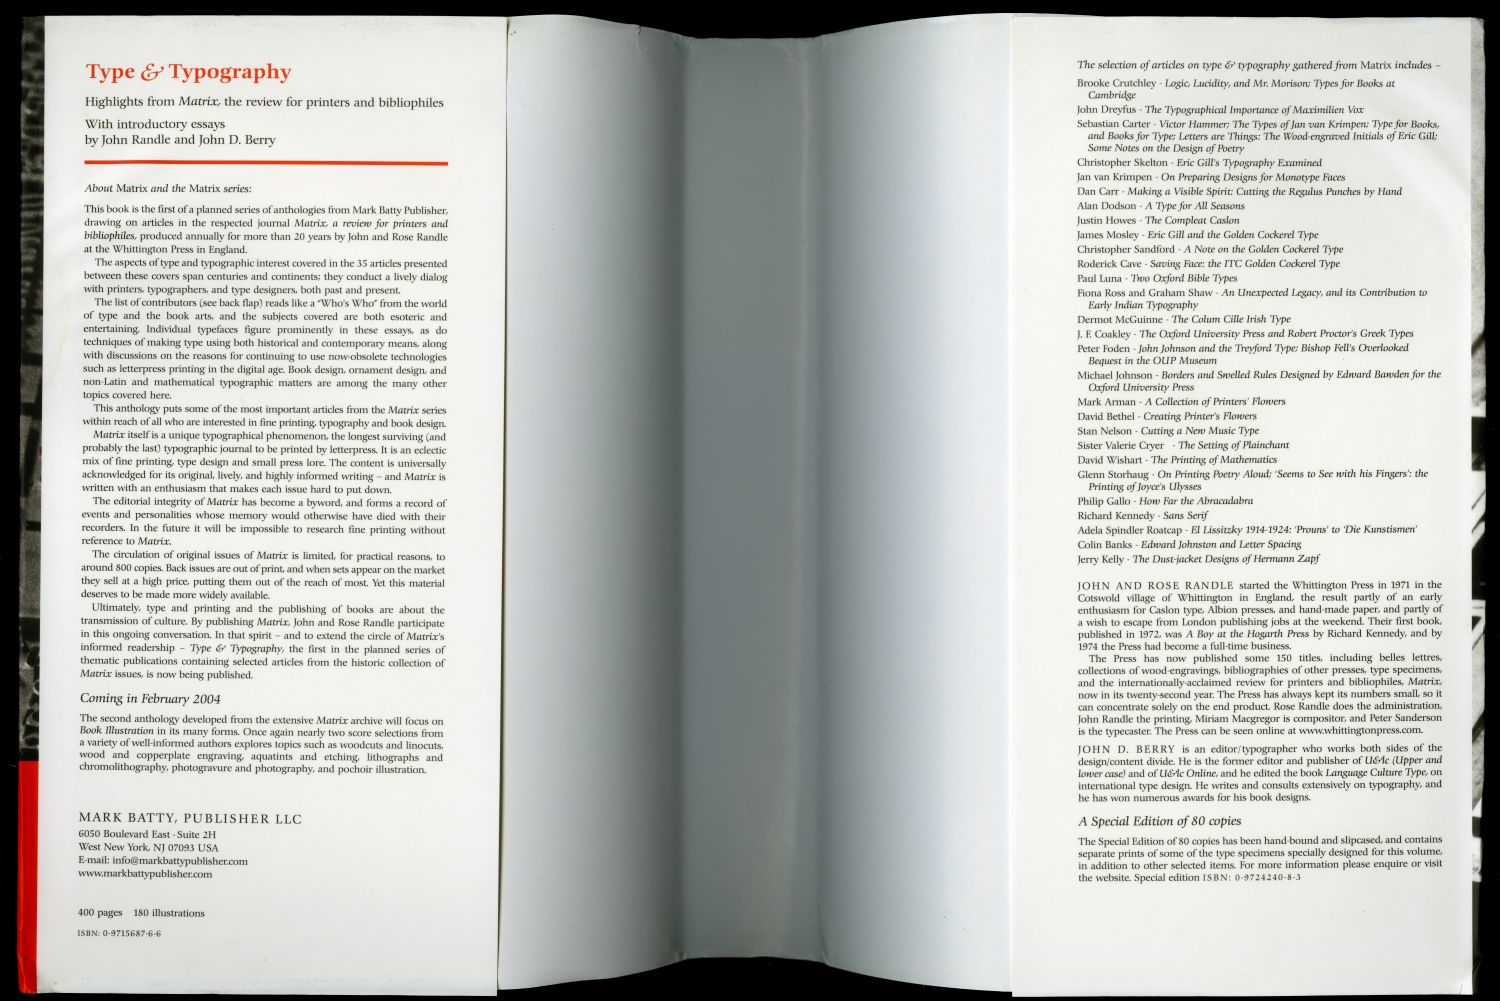 『Type & Typography』（2003年、Mark Batty Publisher）ダストラッパー02